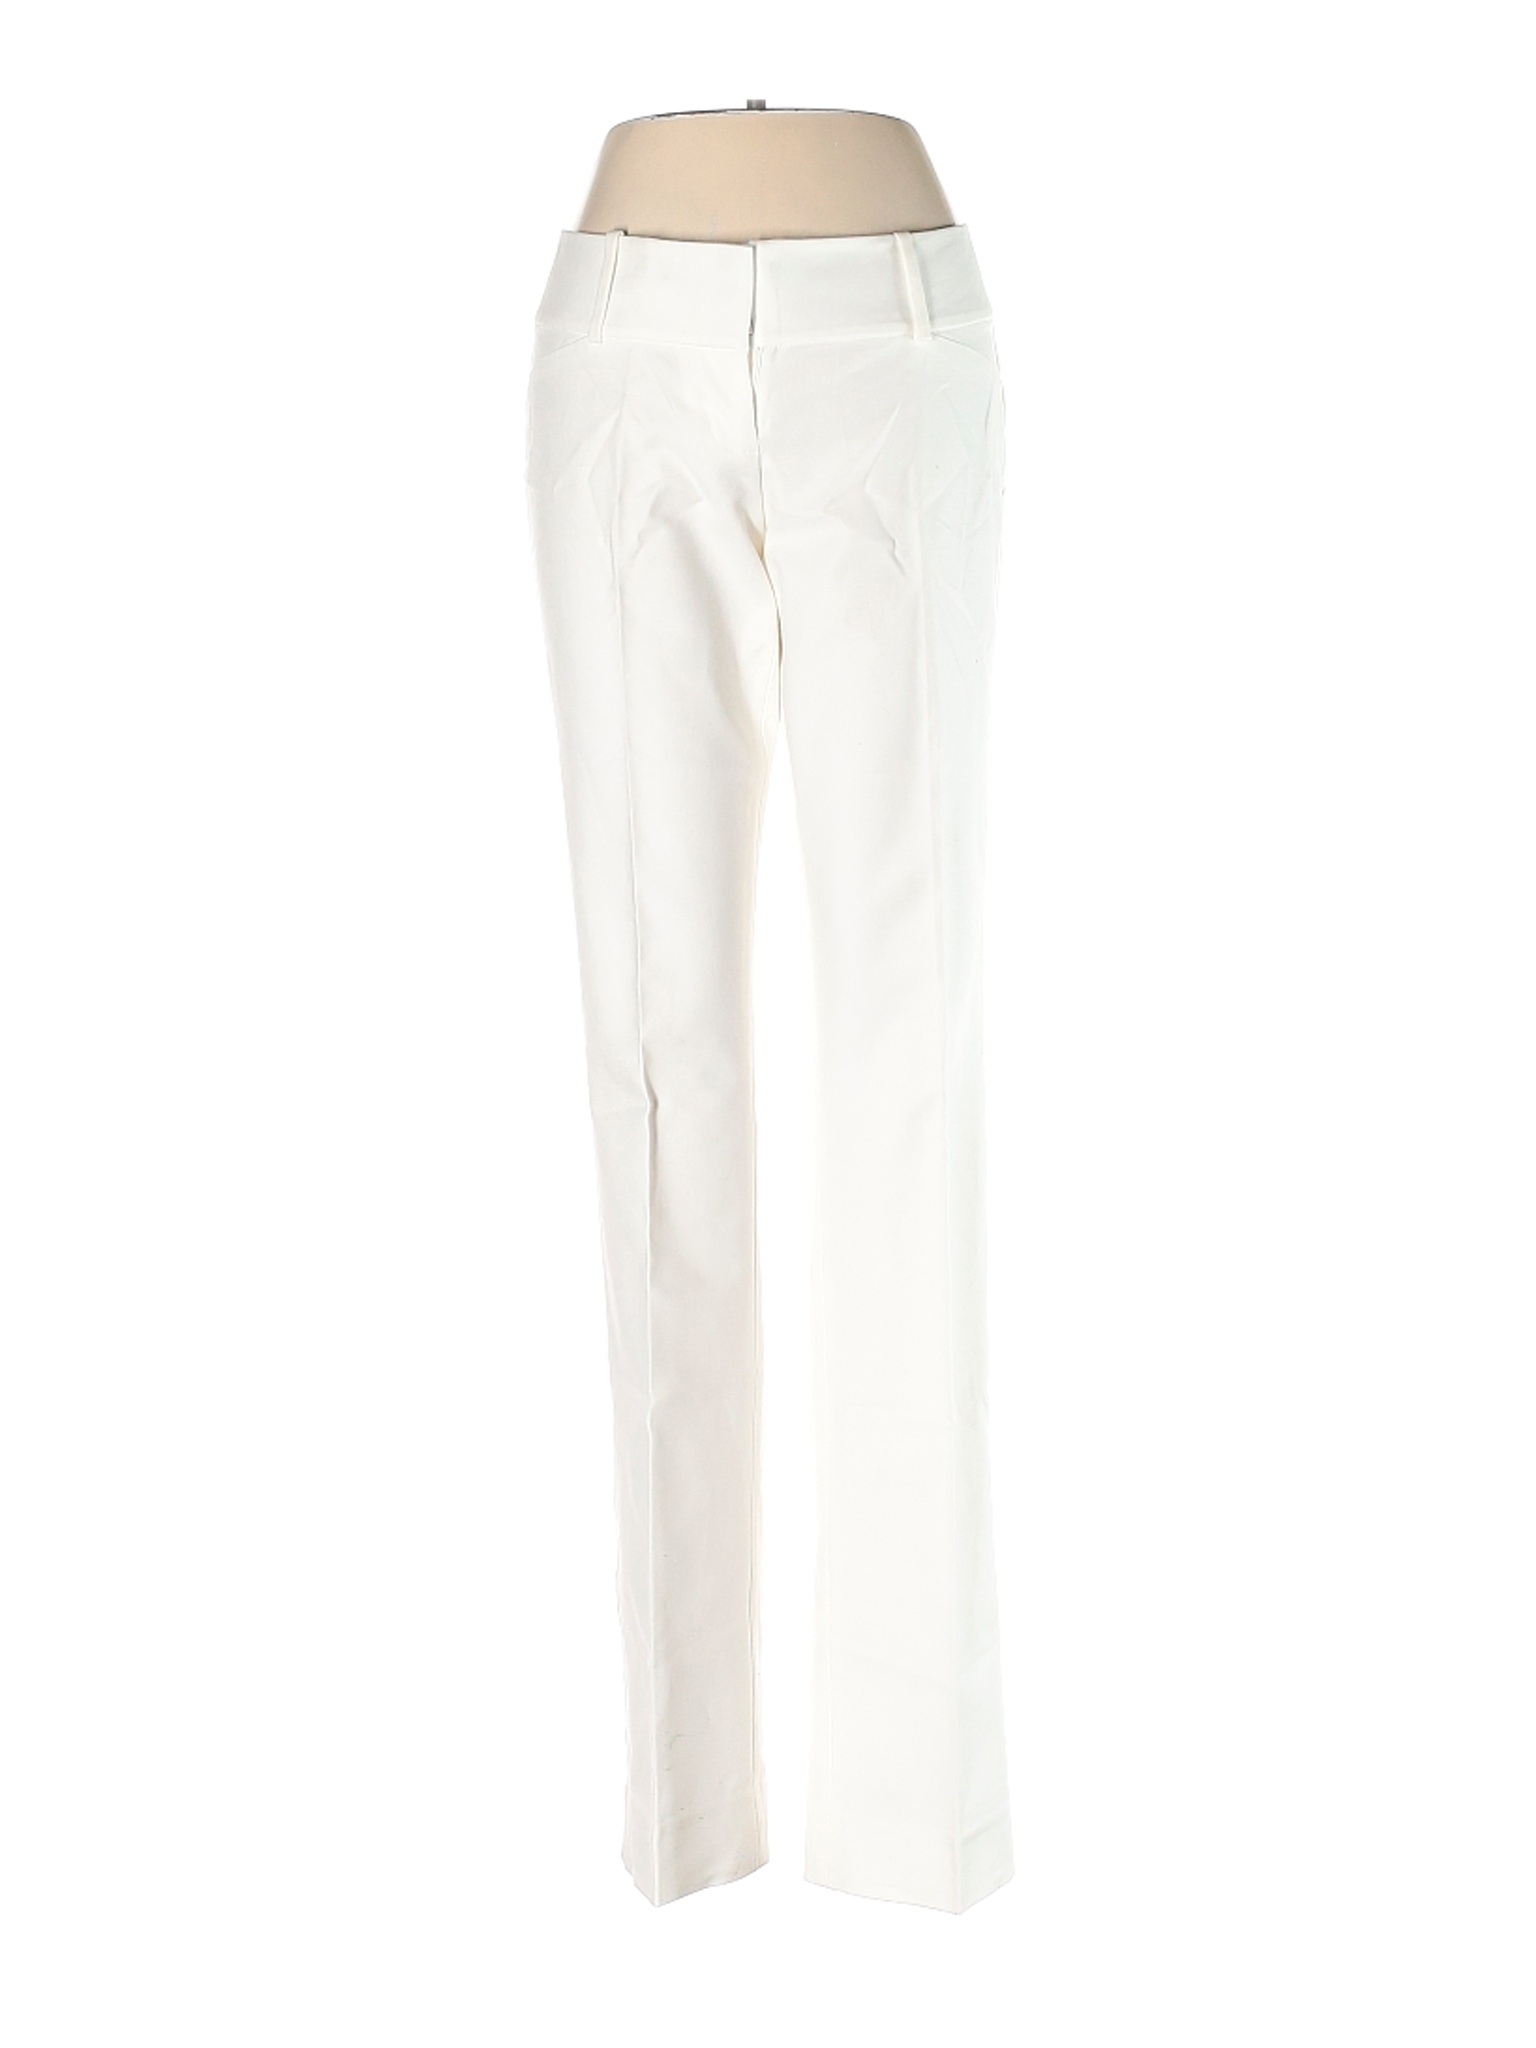 NWT The Limited Women White Dress Pants 2 | eBay